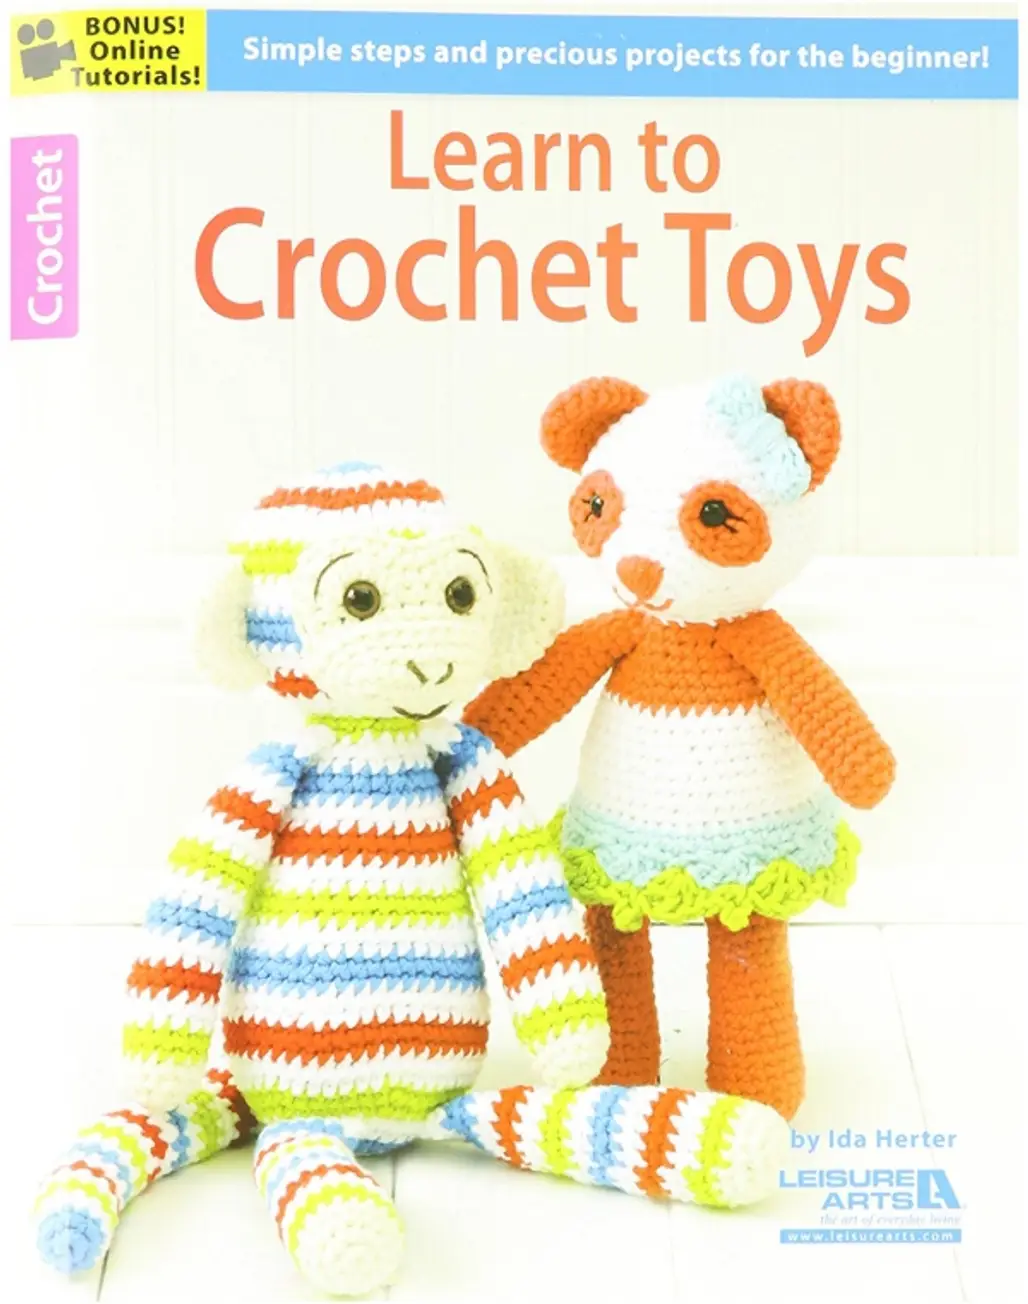 product,art,toy,crochet,stuffed toy,